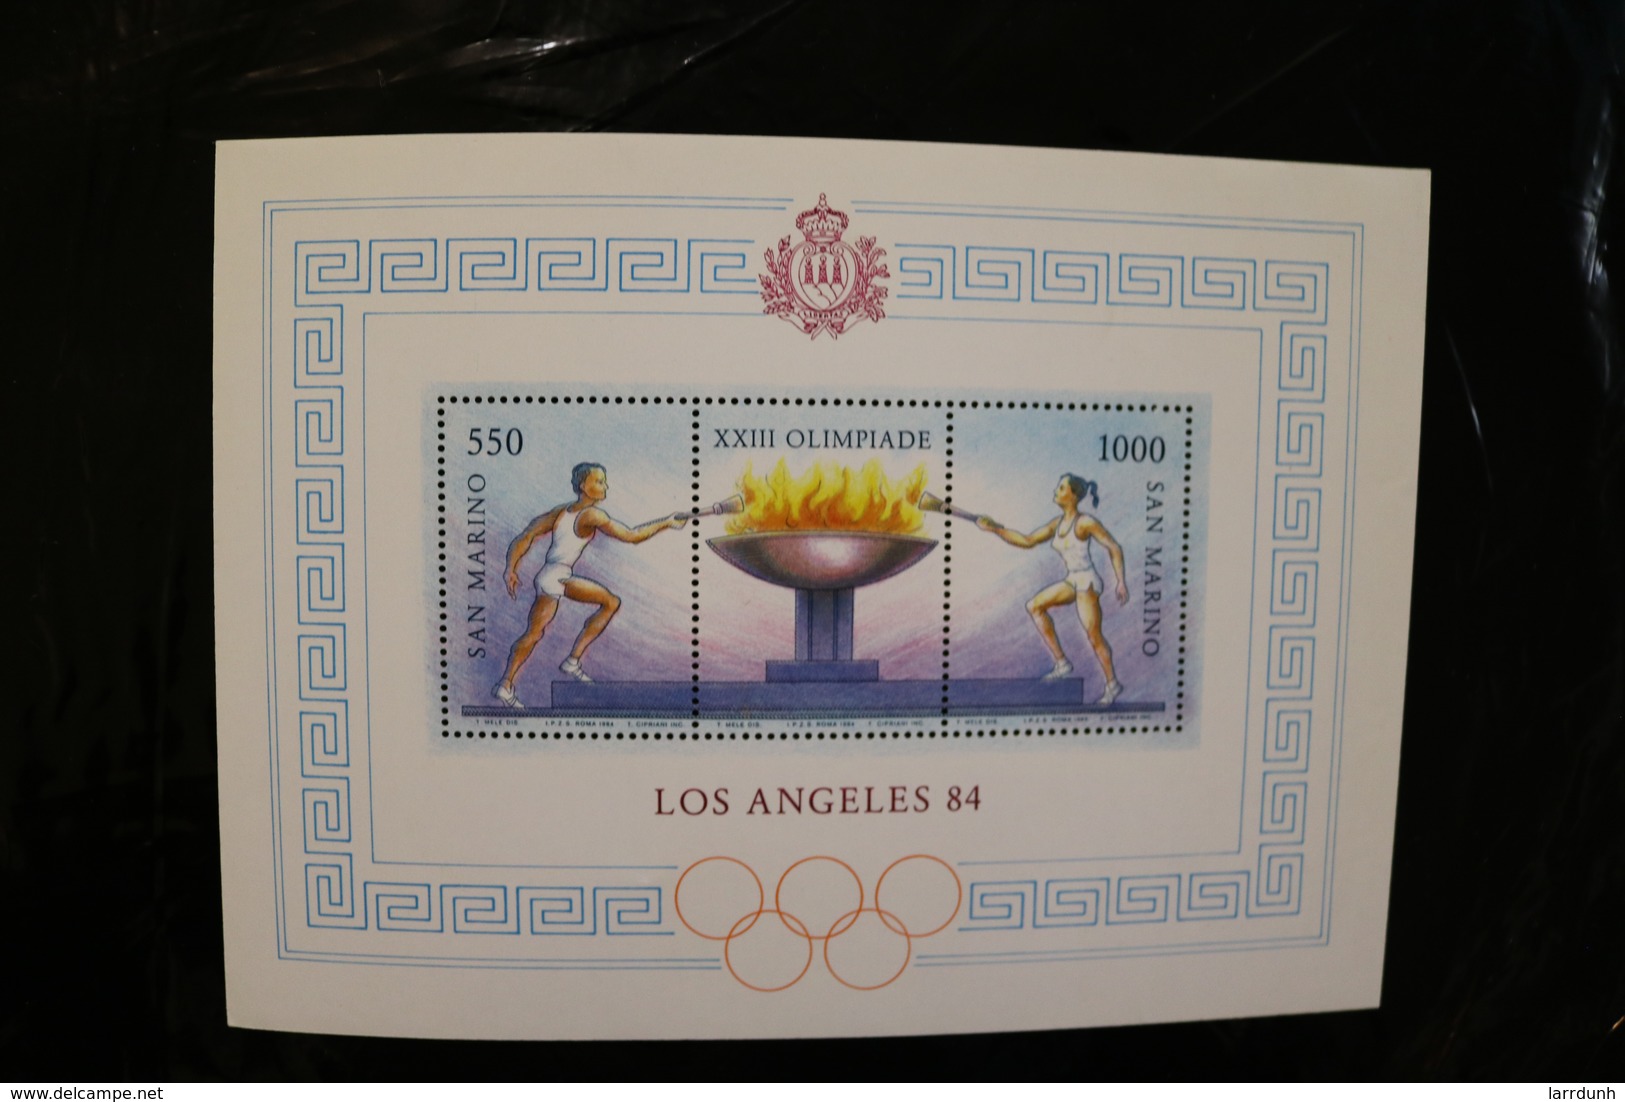 San Marino Los Angeles Olympic Games 84 Lighting Flame Souvenir Sheet Block MNH 1984 A04s - Blocks & Sheetlets